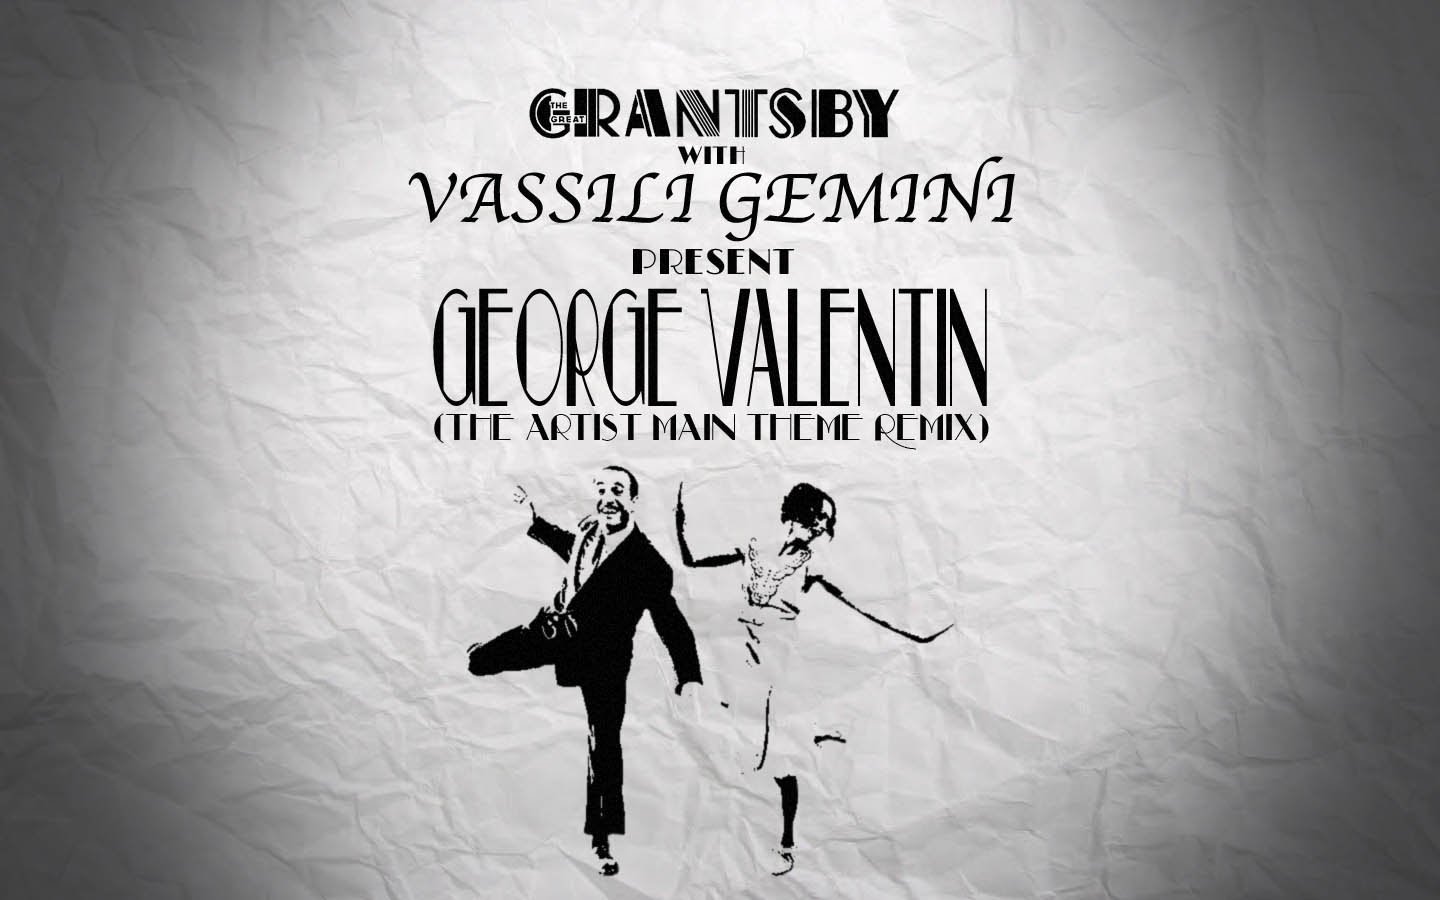 George Valentin (The Artist Main Theme Remix) | Ludovic Bource vs. Vassili Gemini